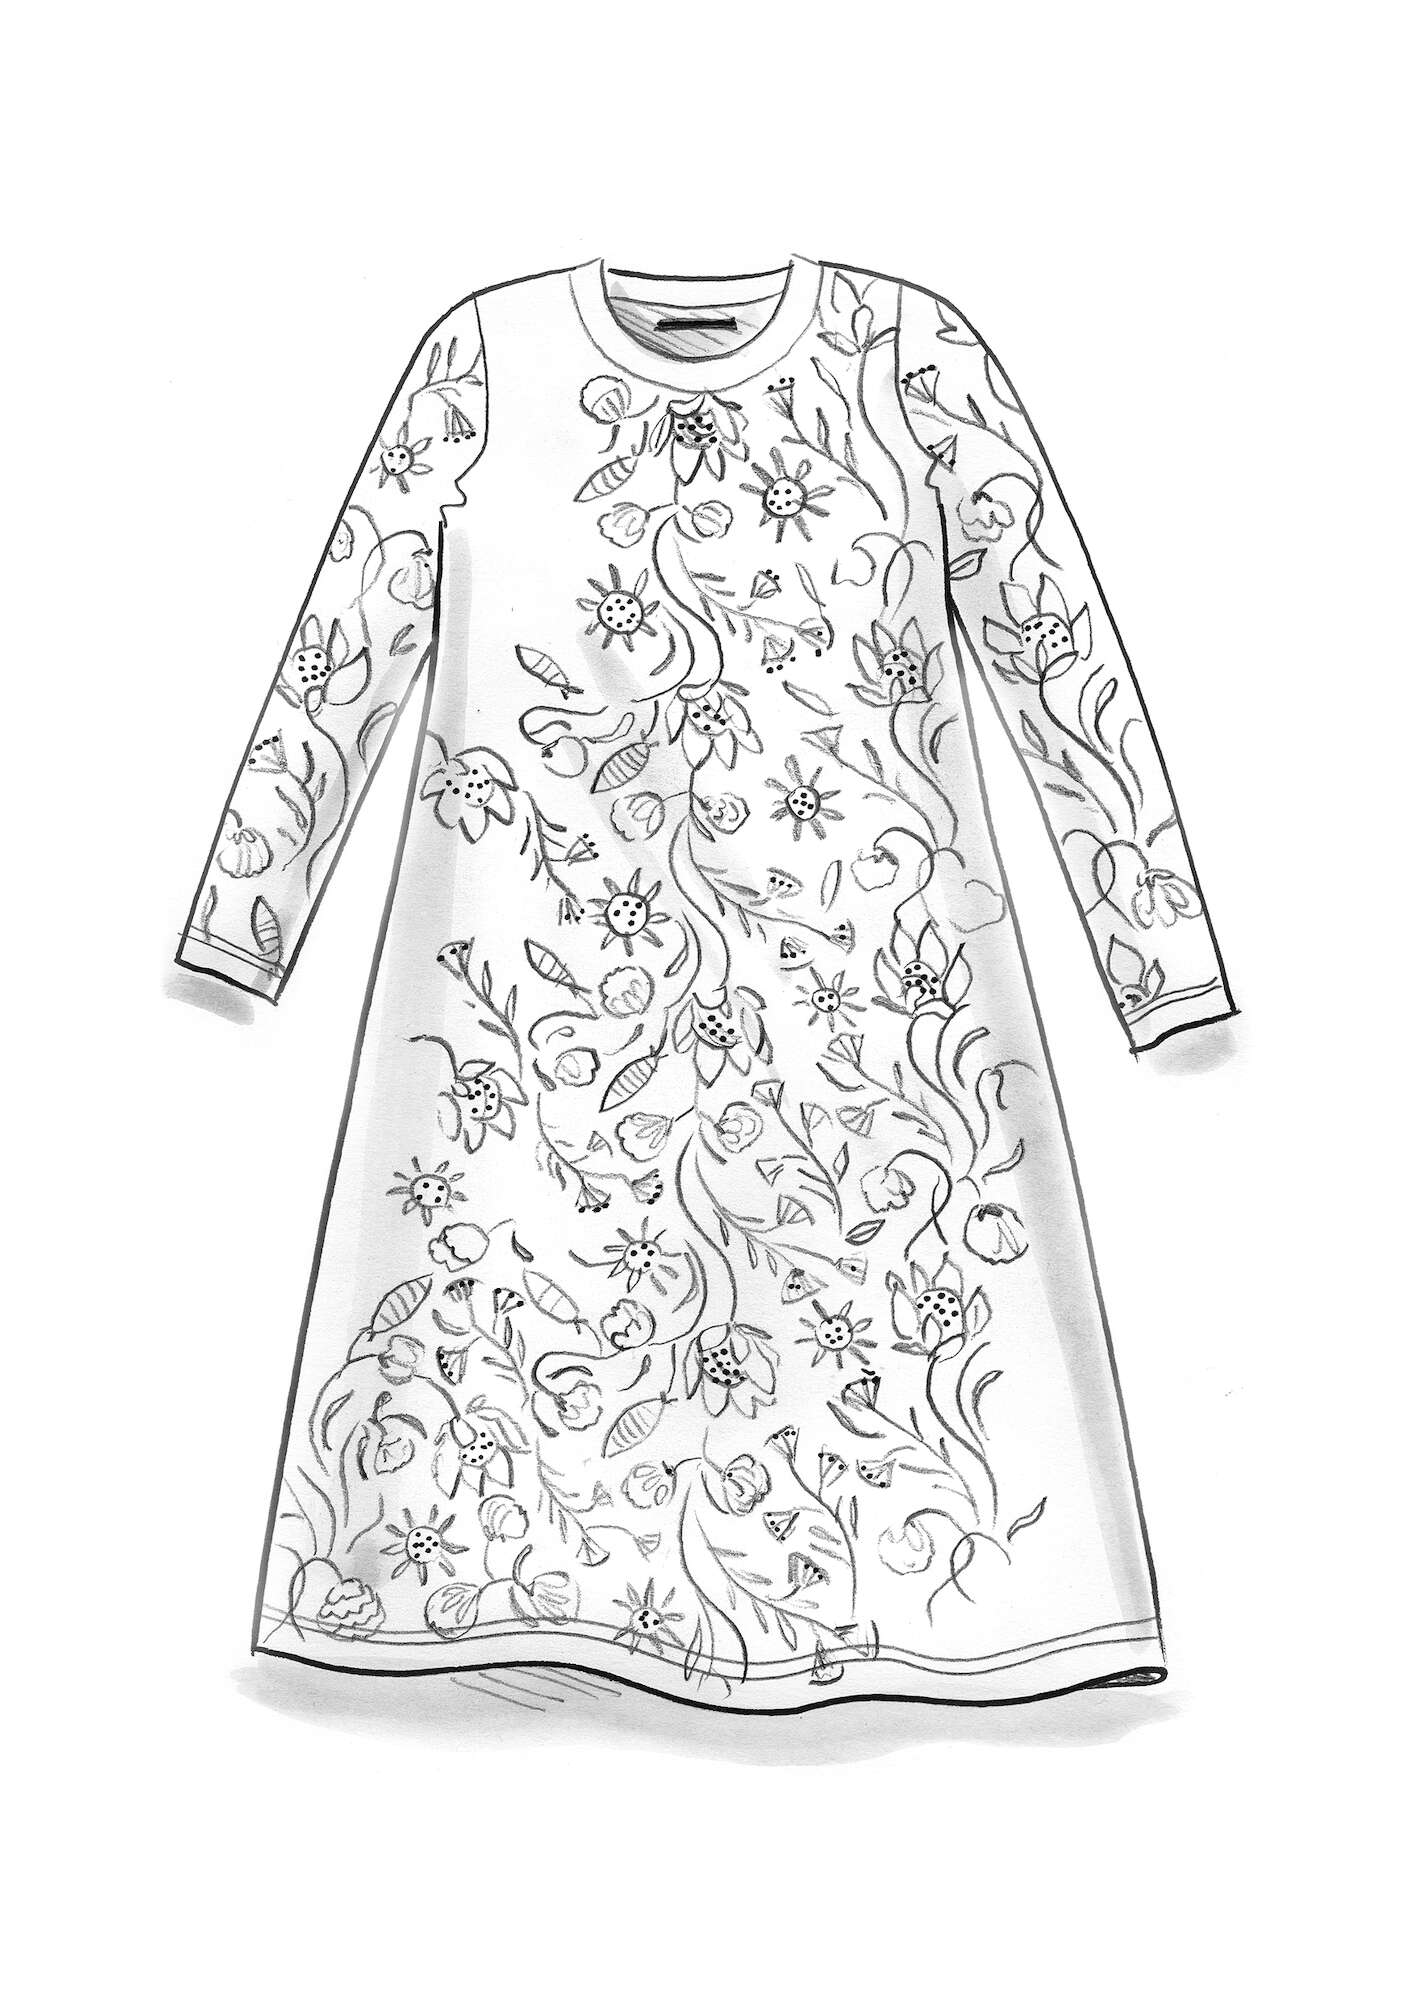 Tricot jurk  Protea  van lyocell/elastaan vlasblauw